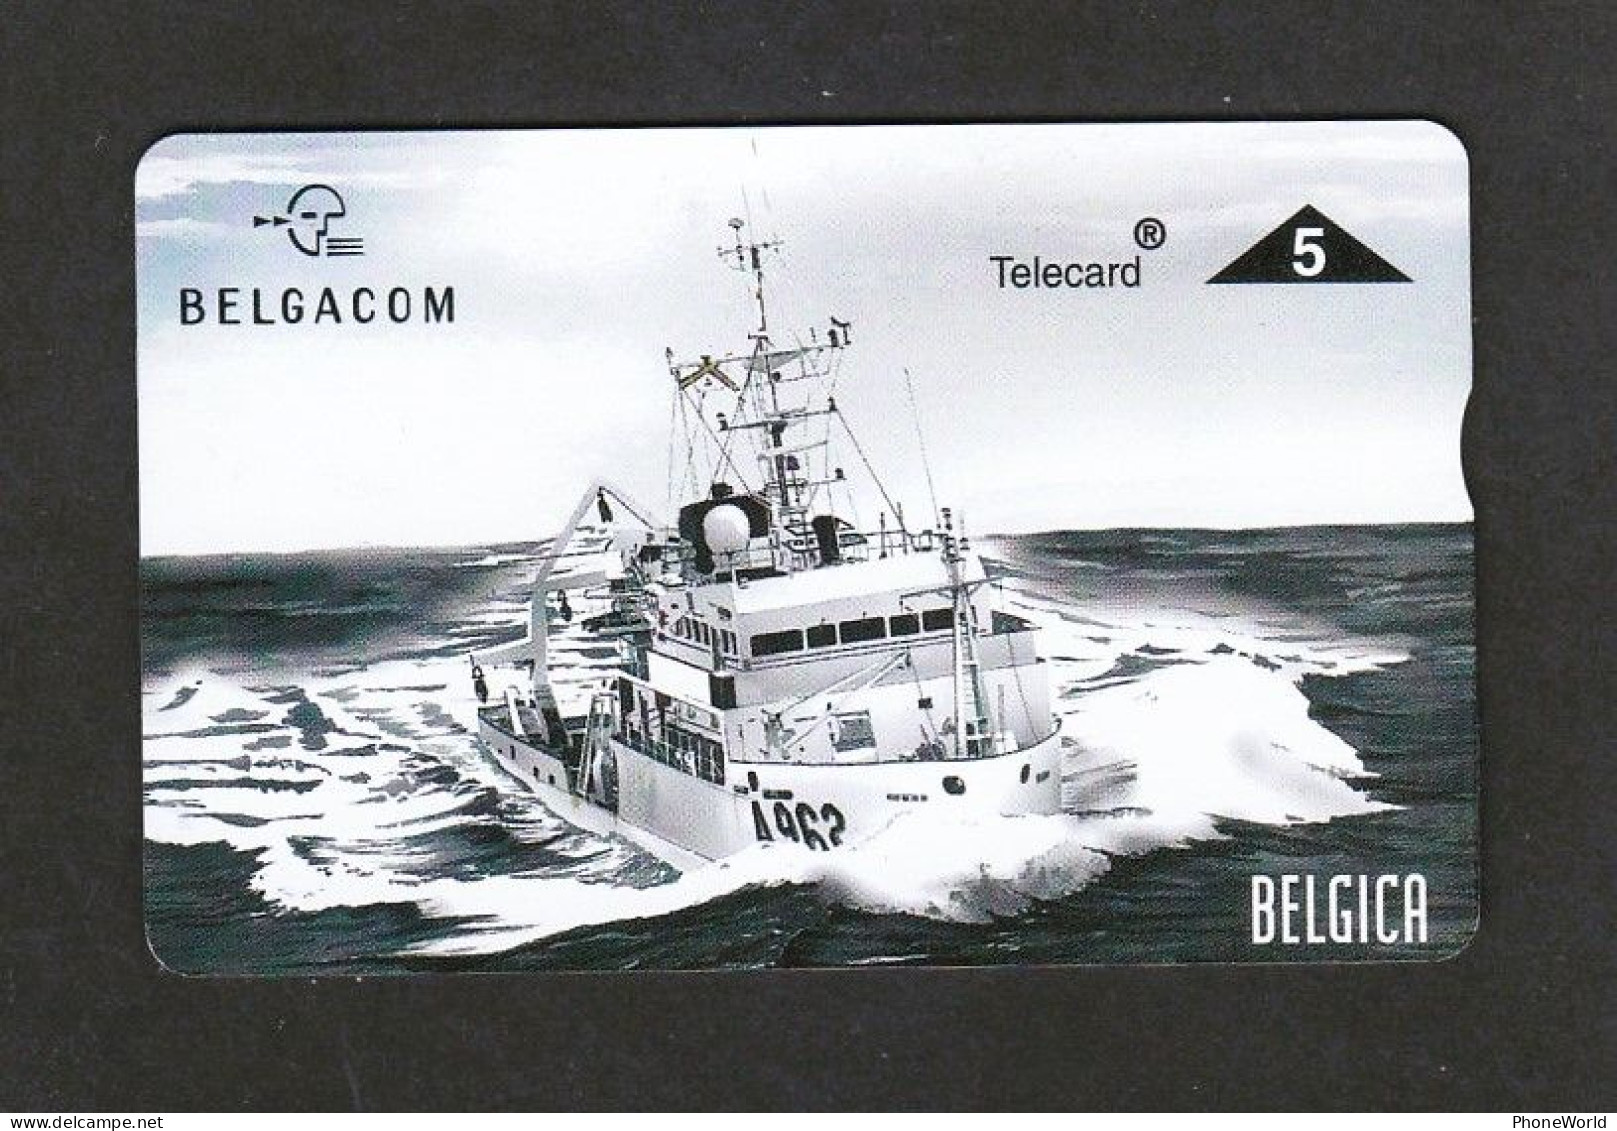 Belgacom, P551 - Belgica 2 - 706 L Mint - Ship - Army - Sans Puce